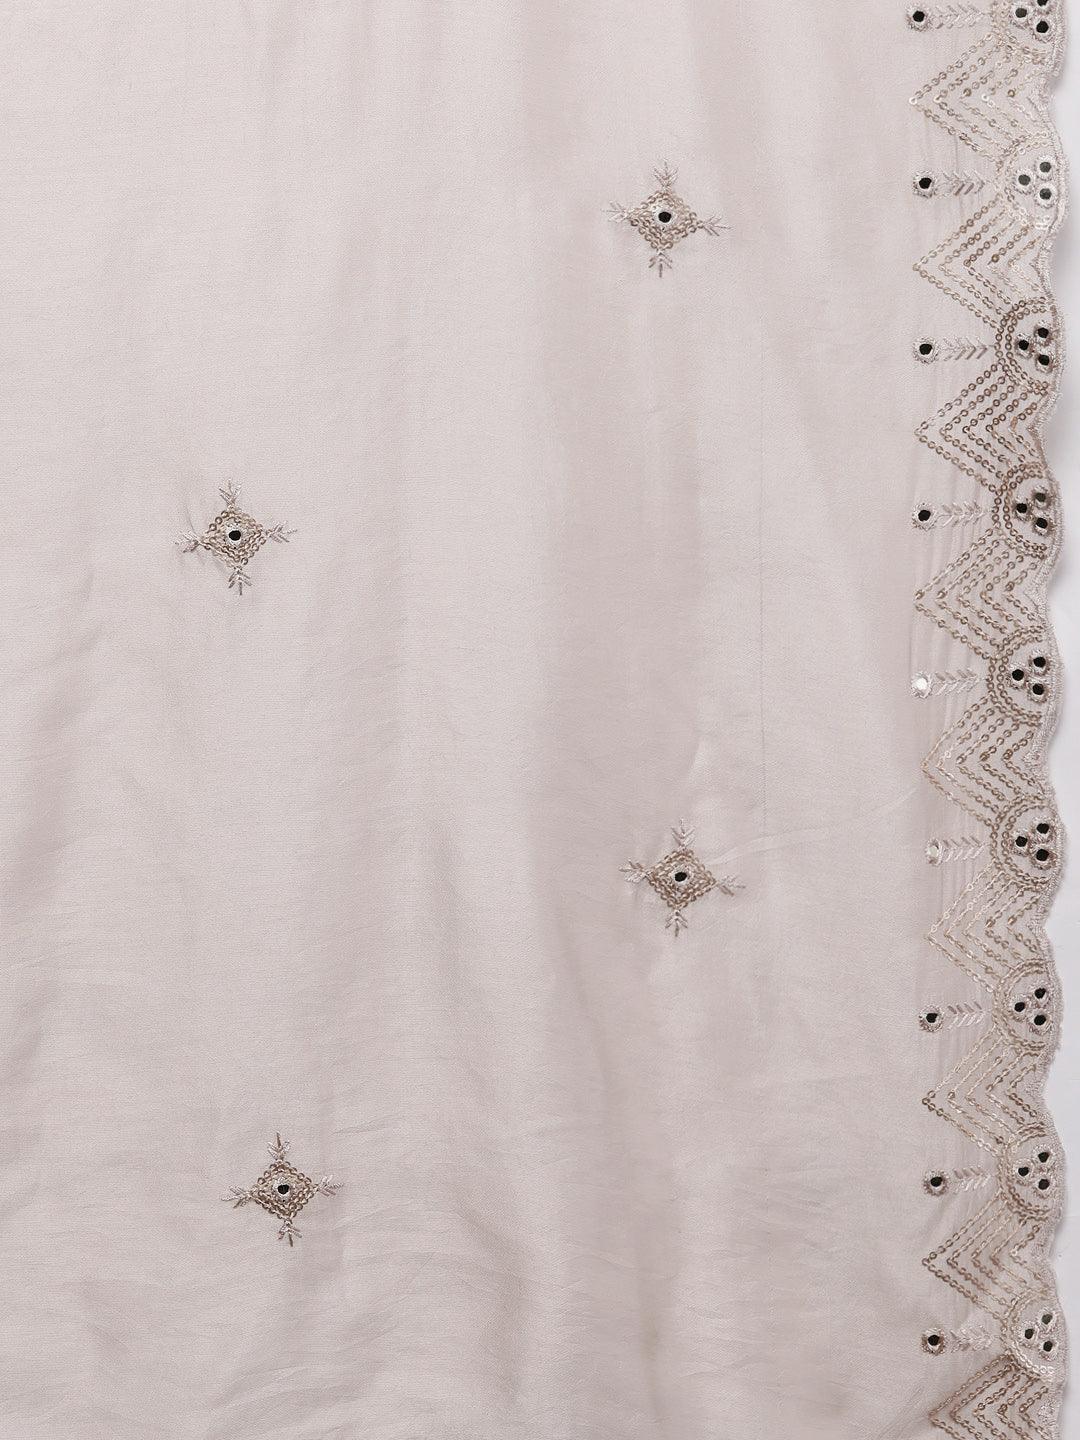 Libas Art Taupe Embroidered Silk Blend Pakistani Suit